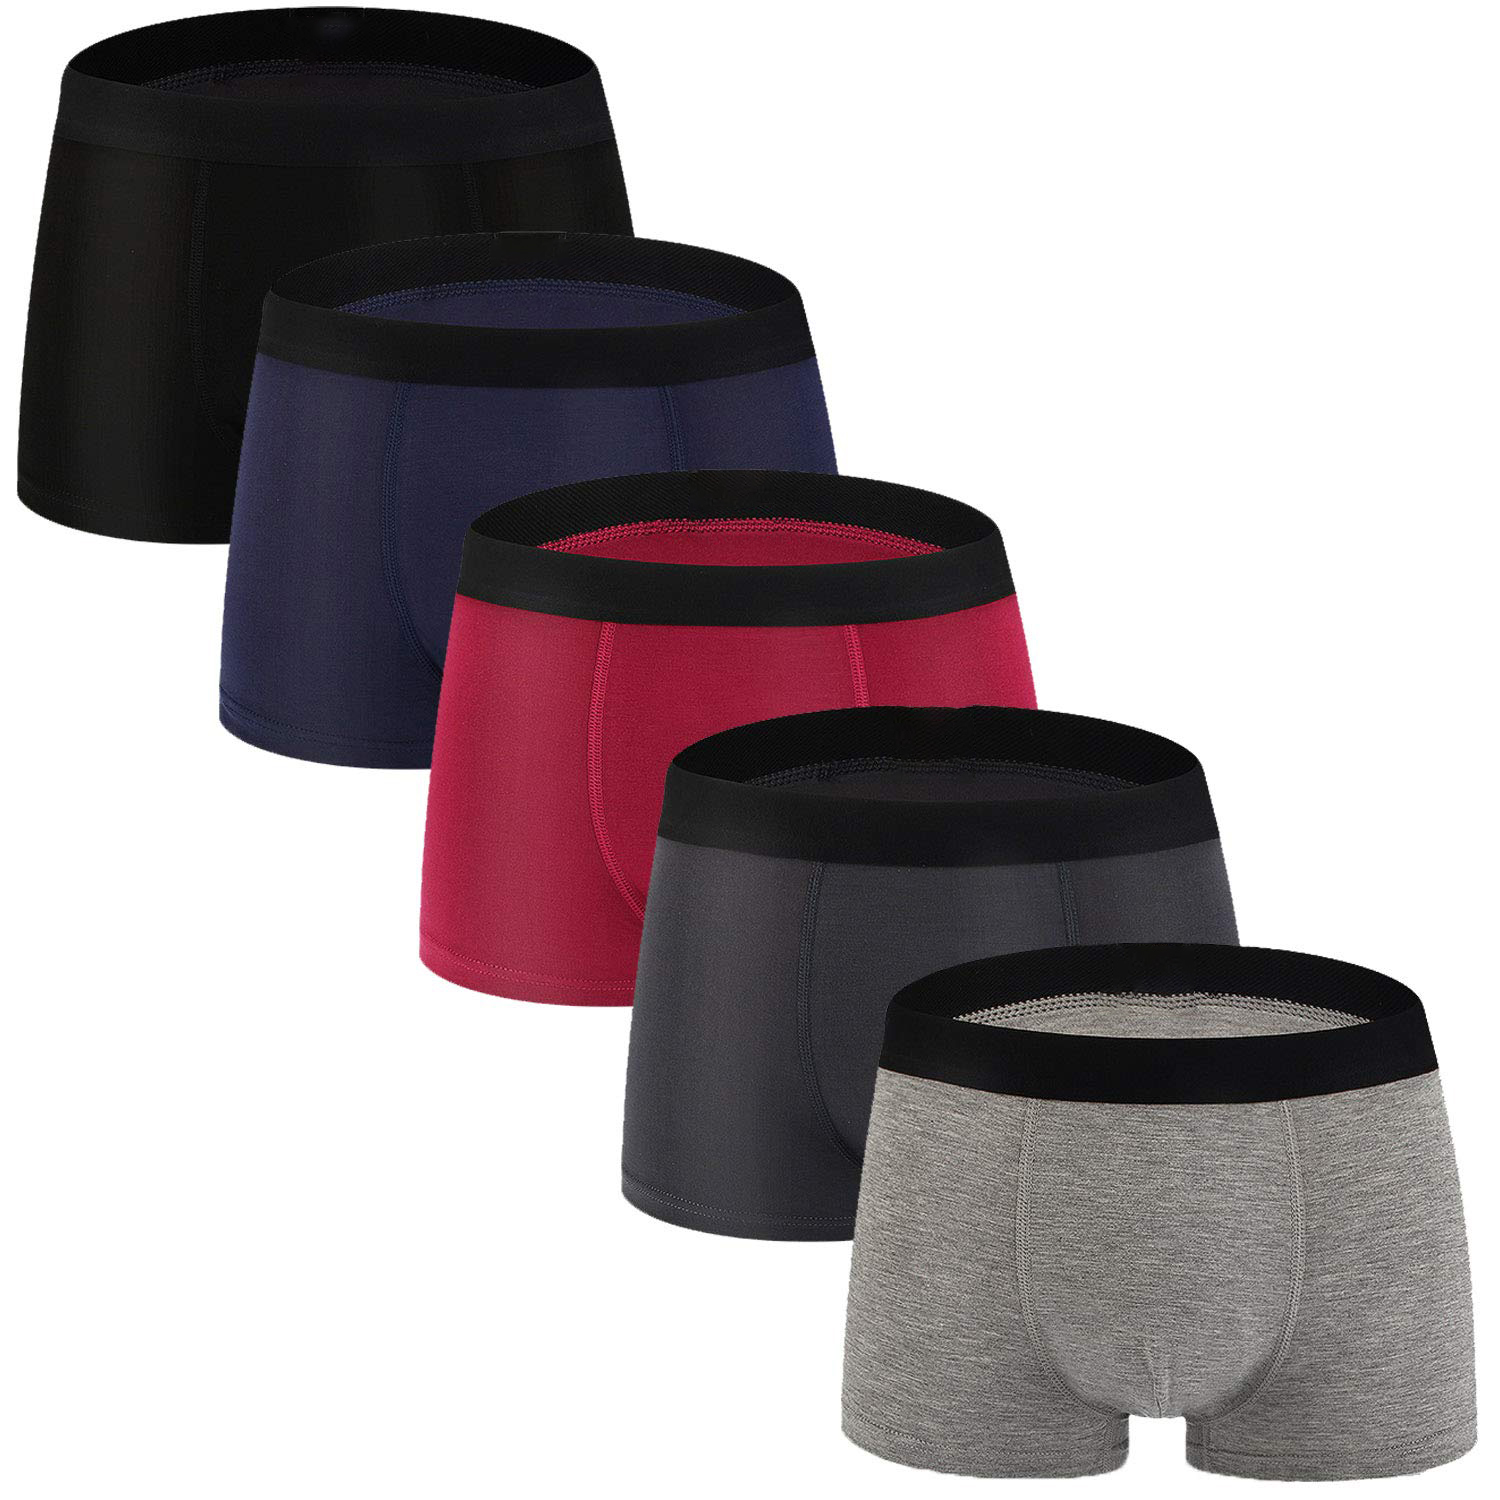 Panlalaking Underwear Soft Bamboo Boxer Briefs (21)